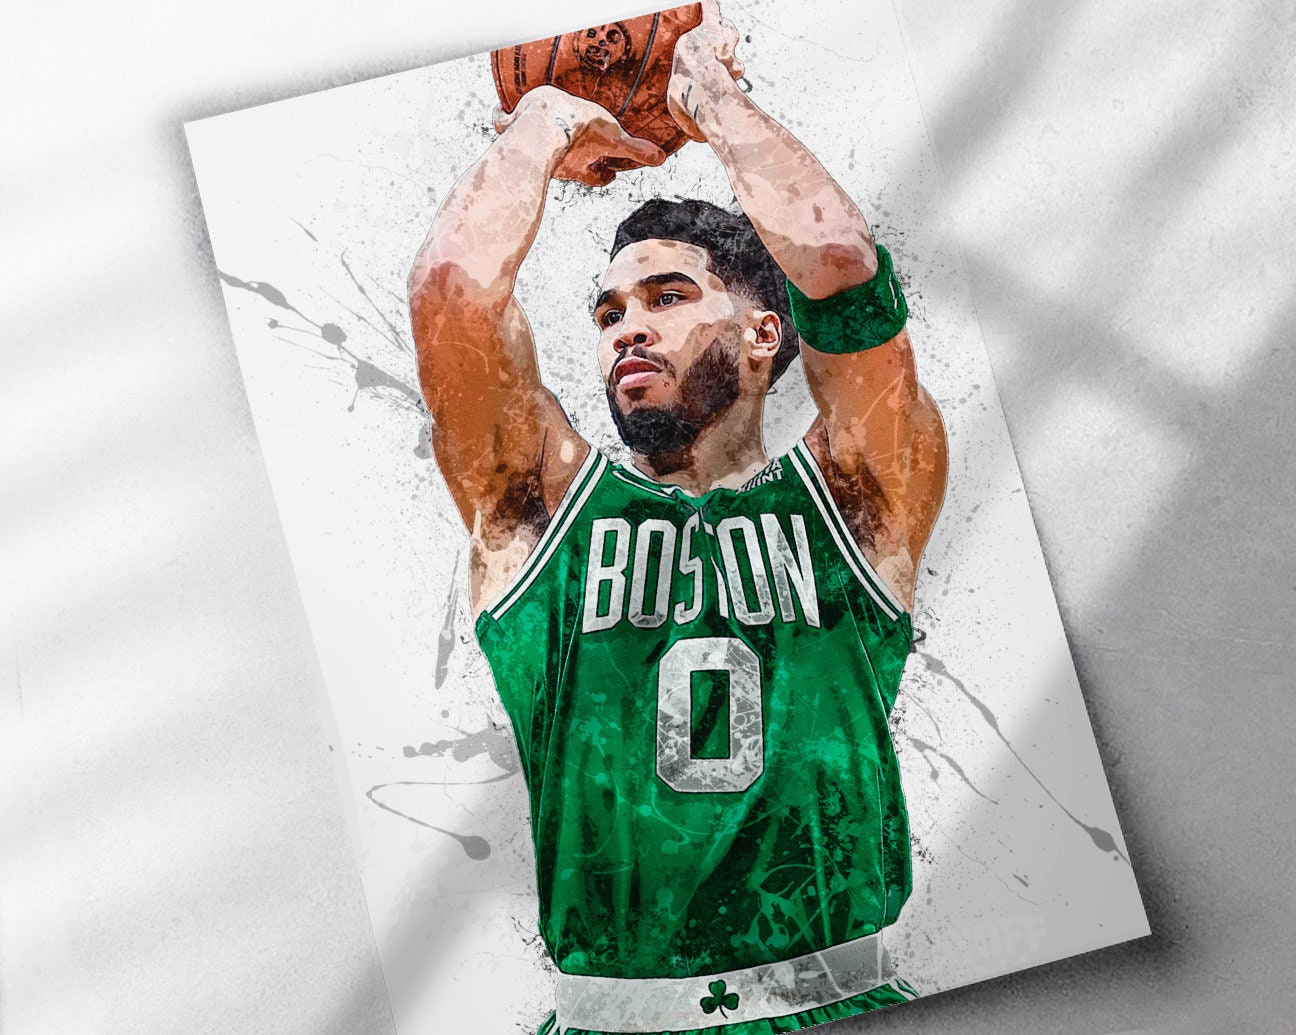 Jayson Tatum Boston Celtics Jersey Art Board Print by SAYIDOWjpg